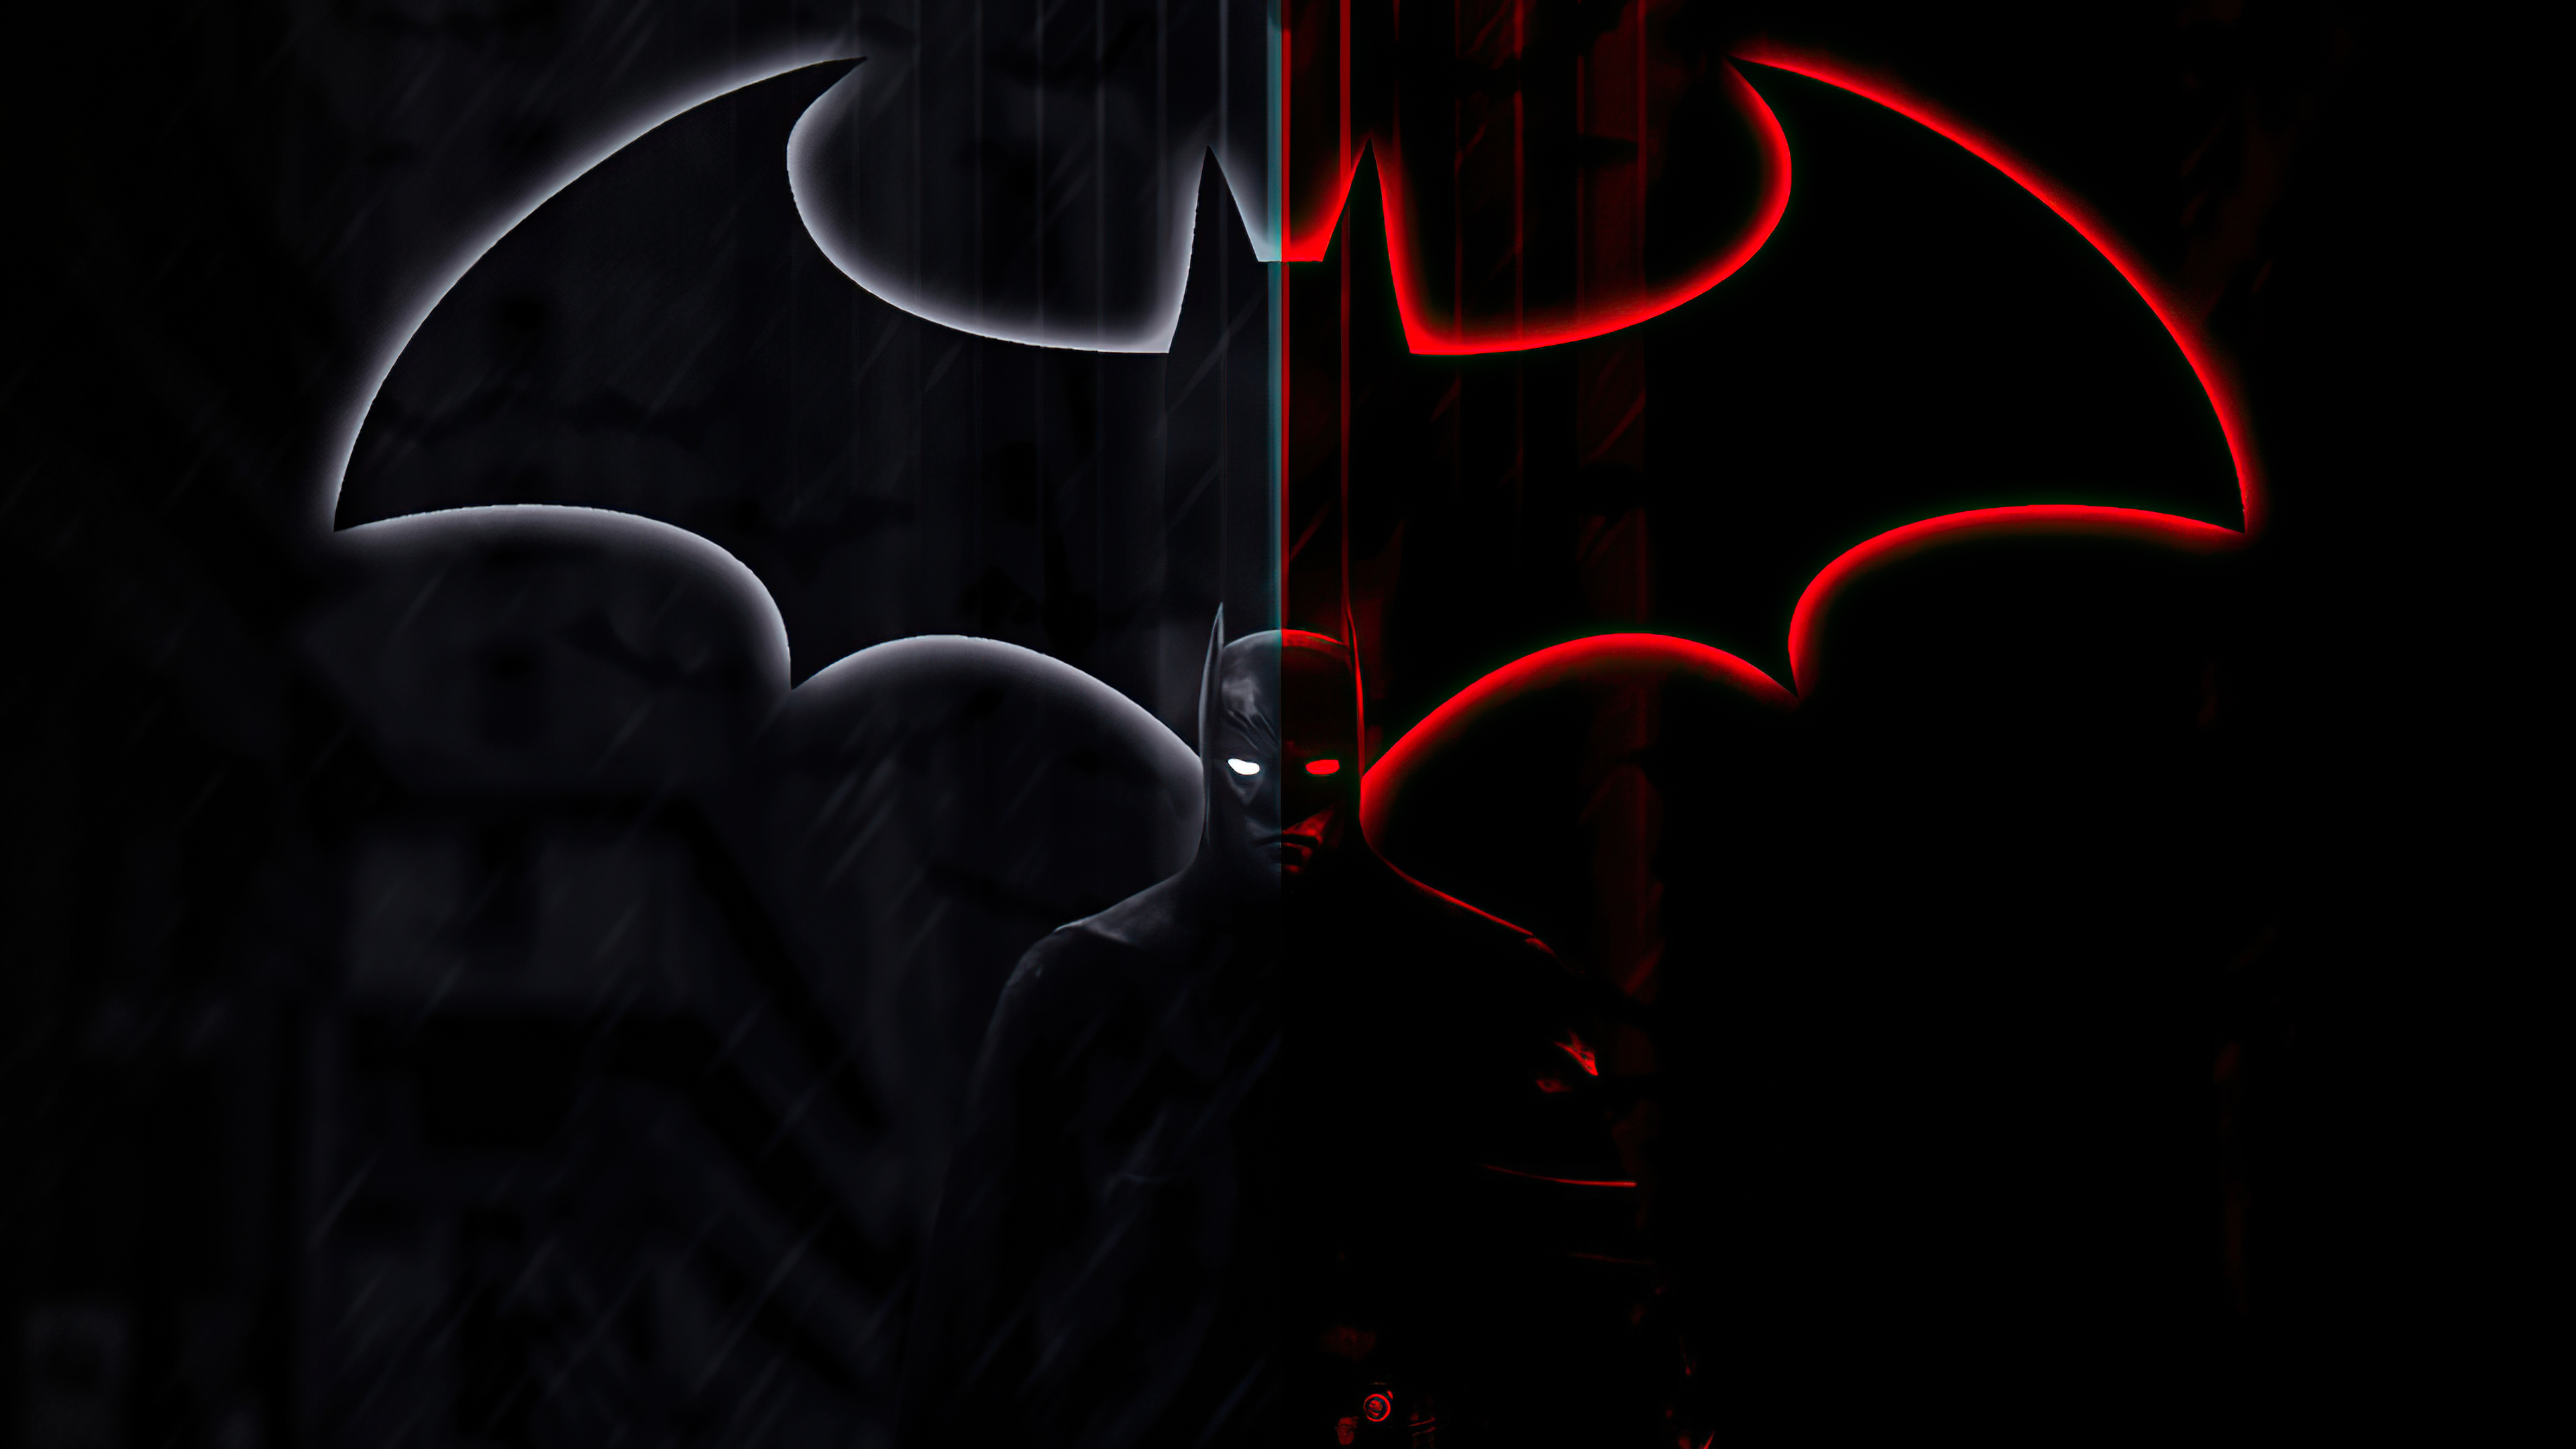 Batman 4k Ultra HD Wallpaper by Universegfx